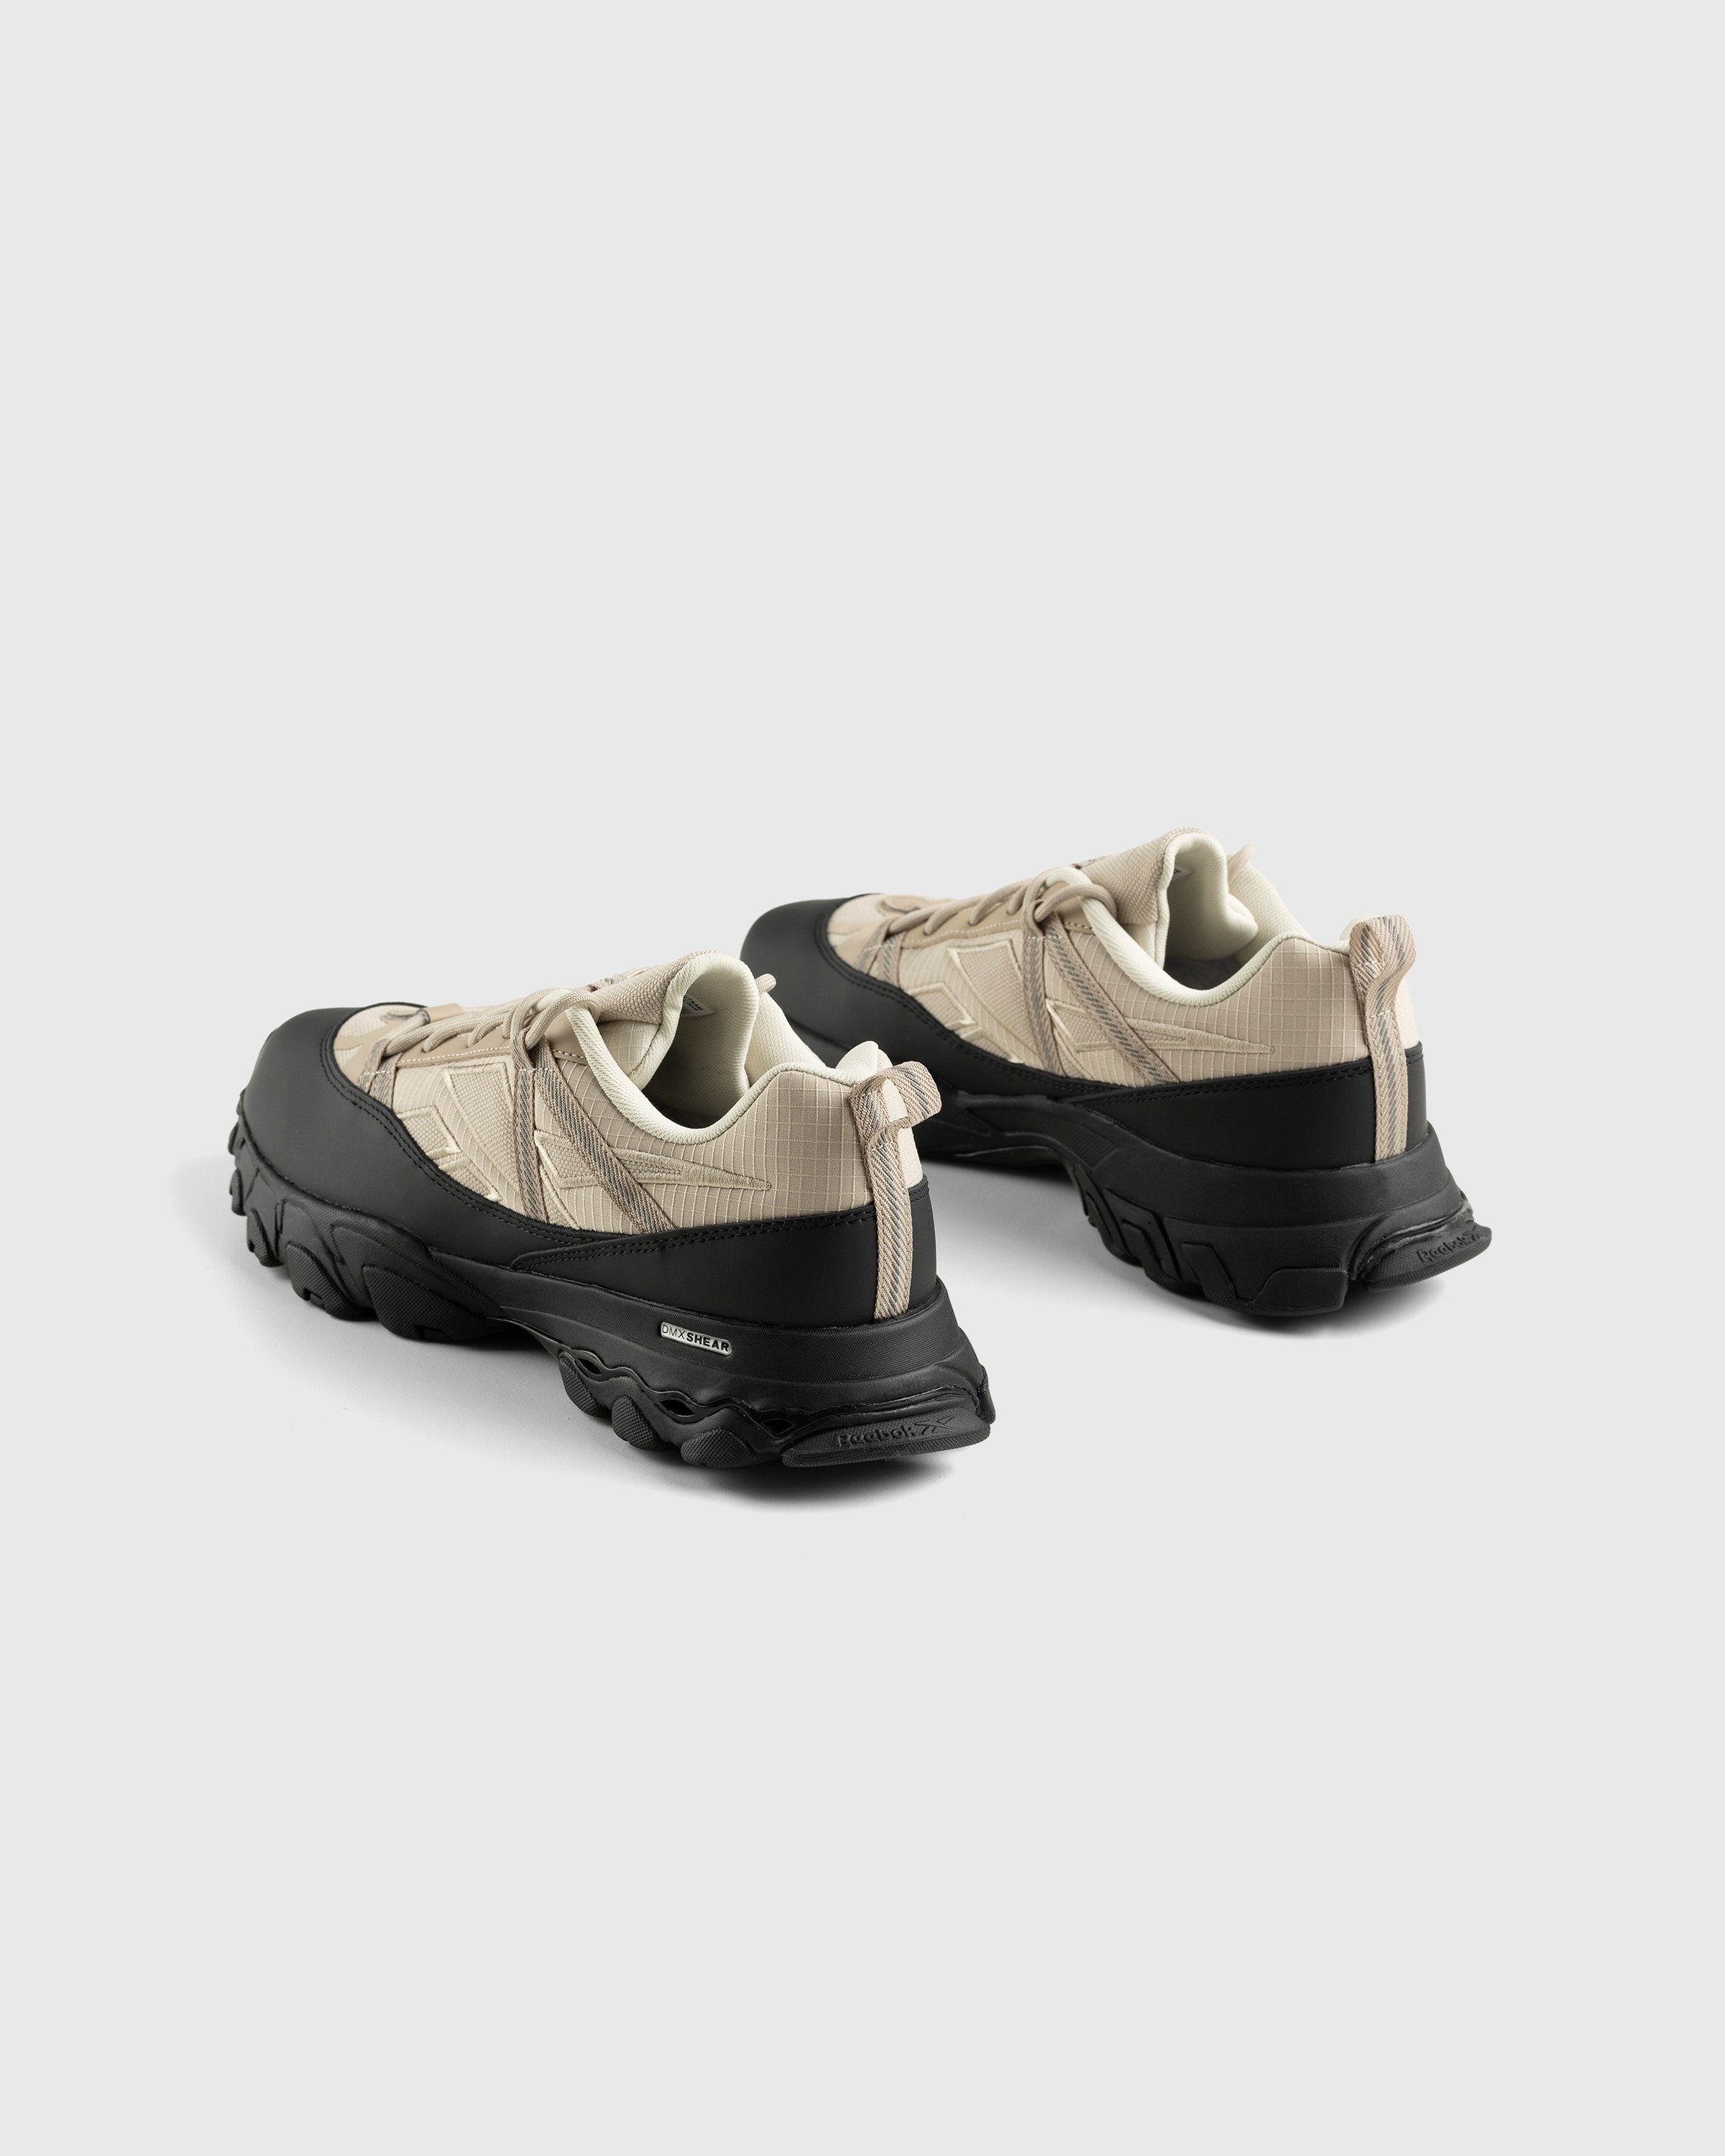 Reebok – DMX Trail Shadow Beige - Low Top Sneakers - Beige - Image 4